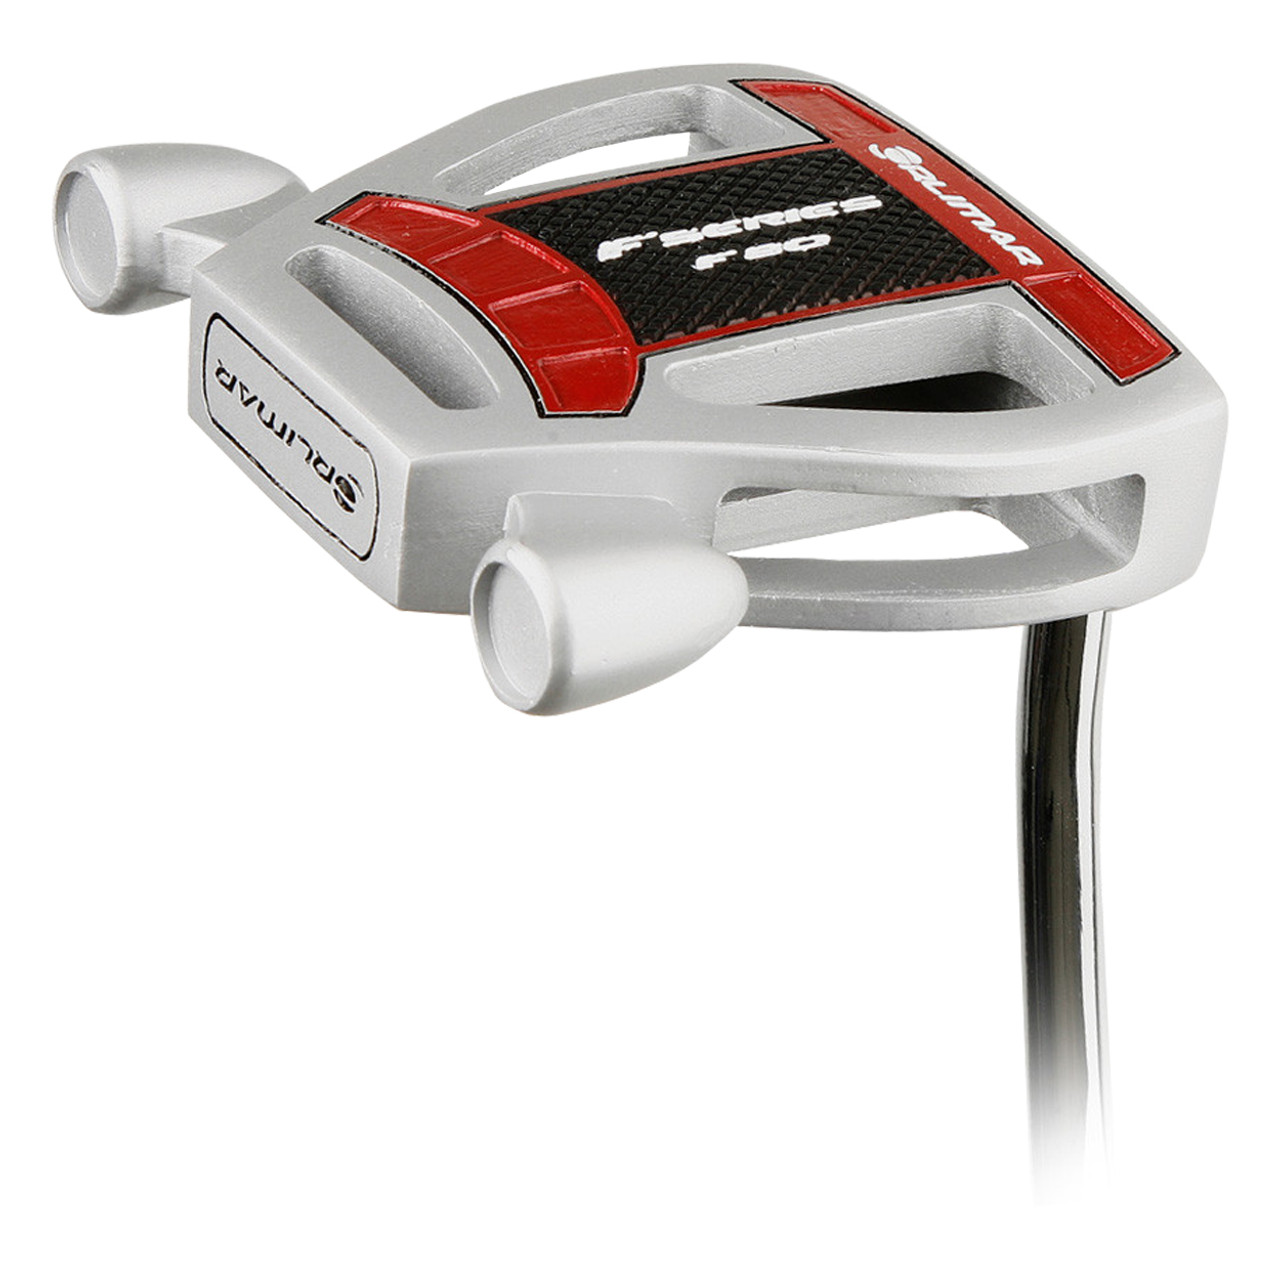 Orlimar F80 Mallet Style Putter (Silver - Black) - GolfEtail.com